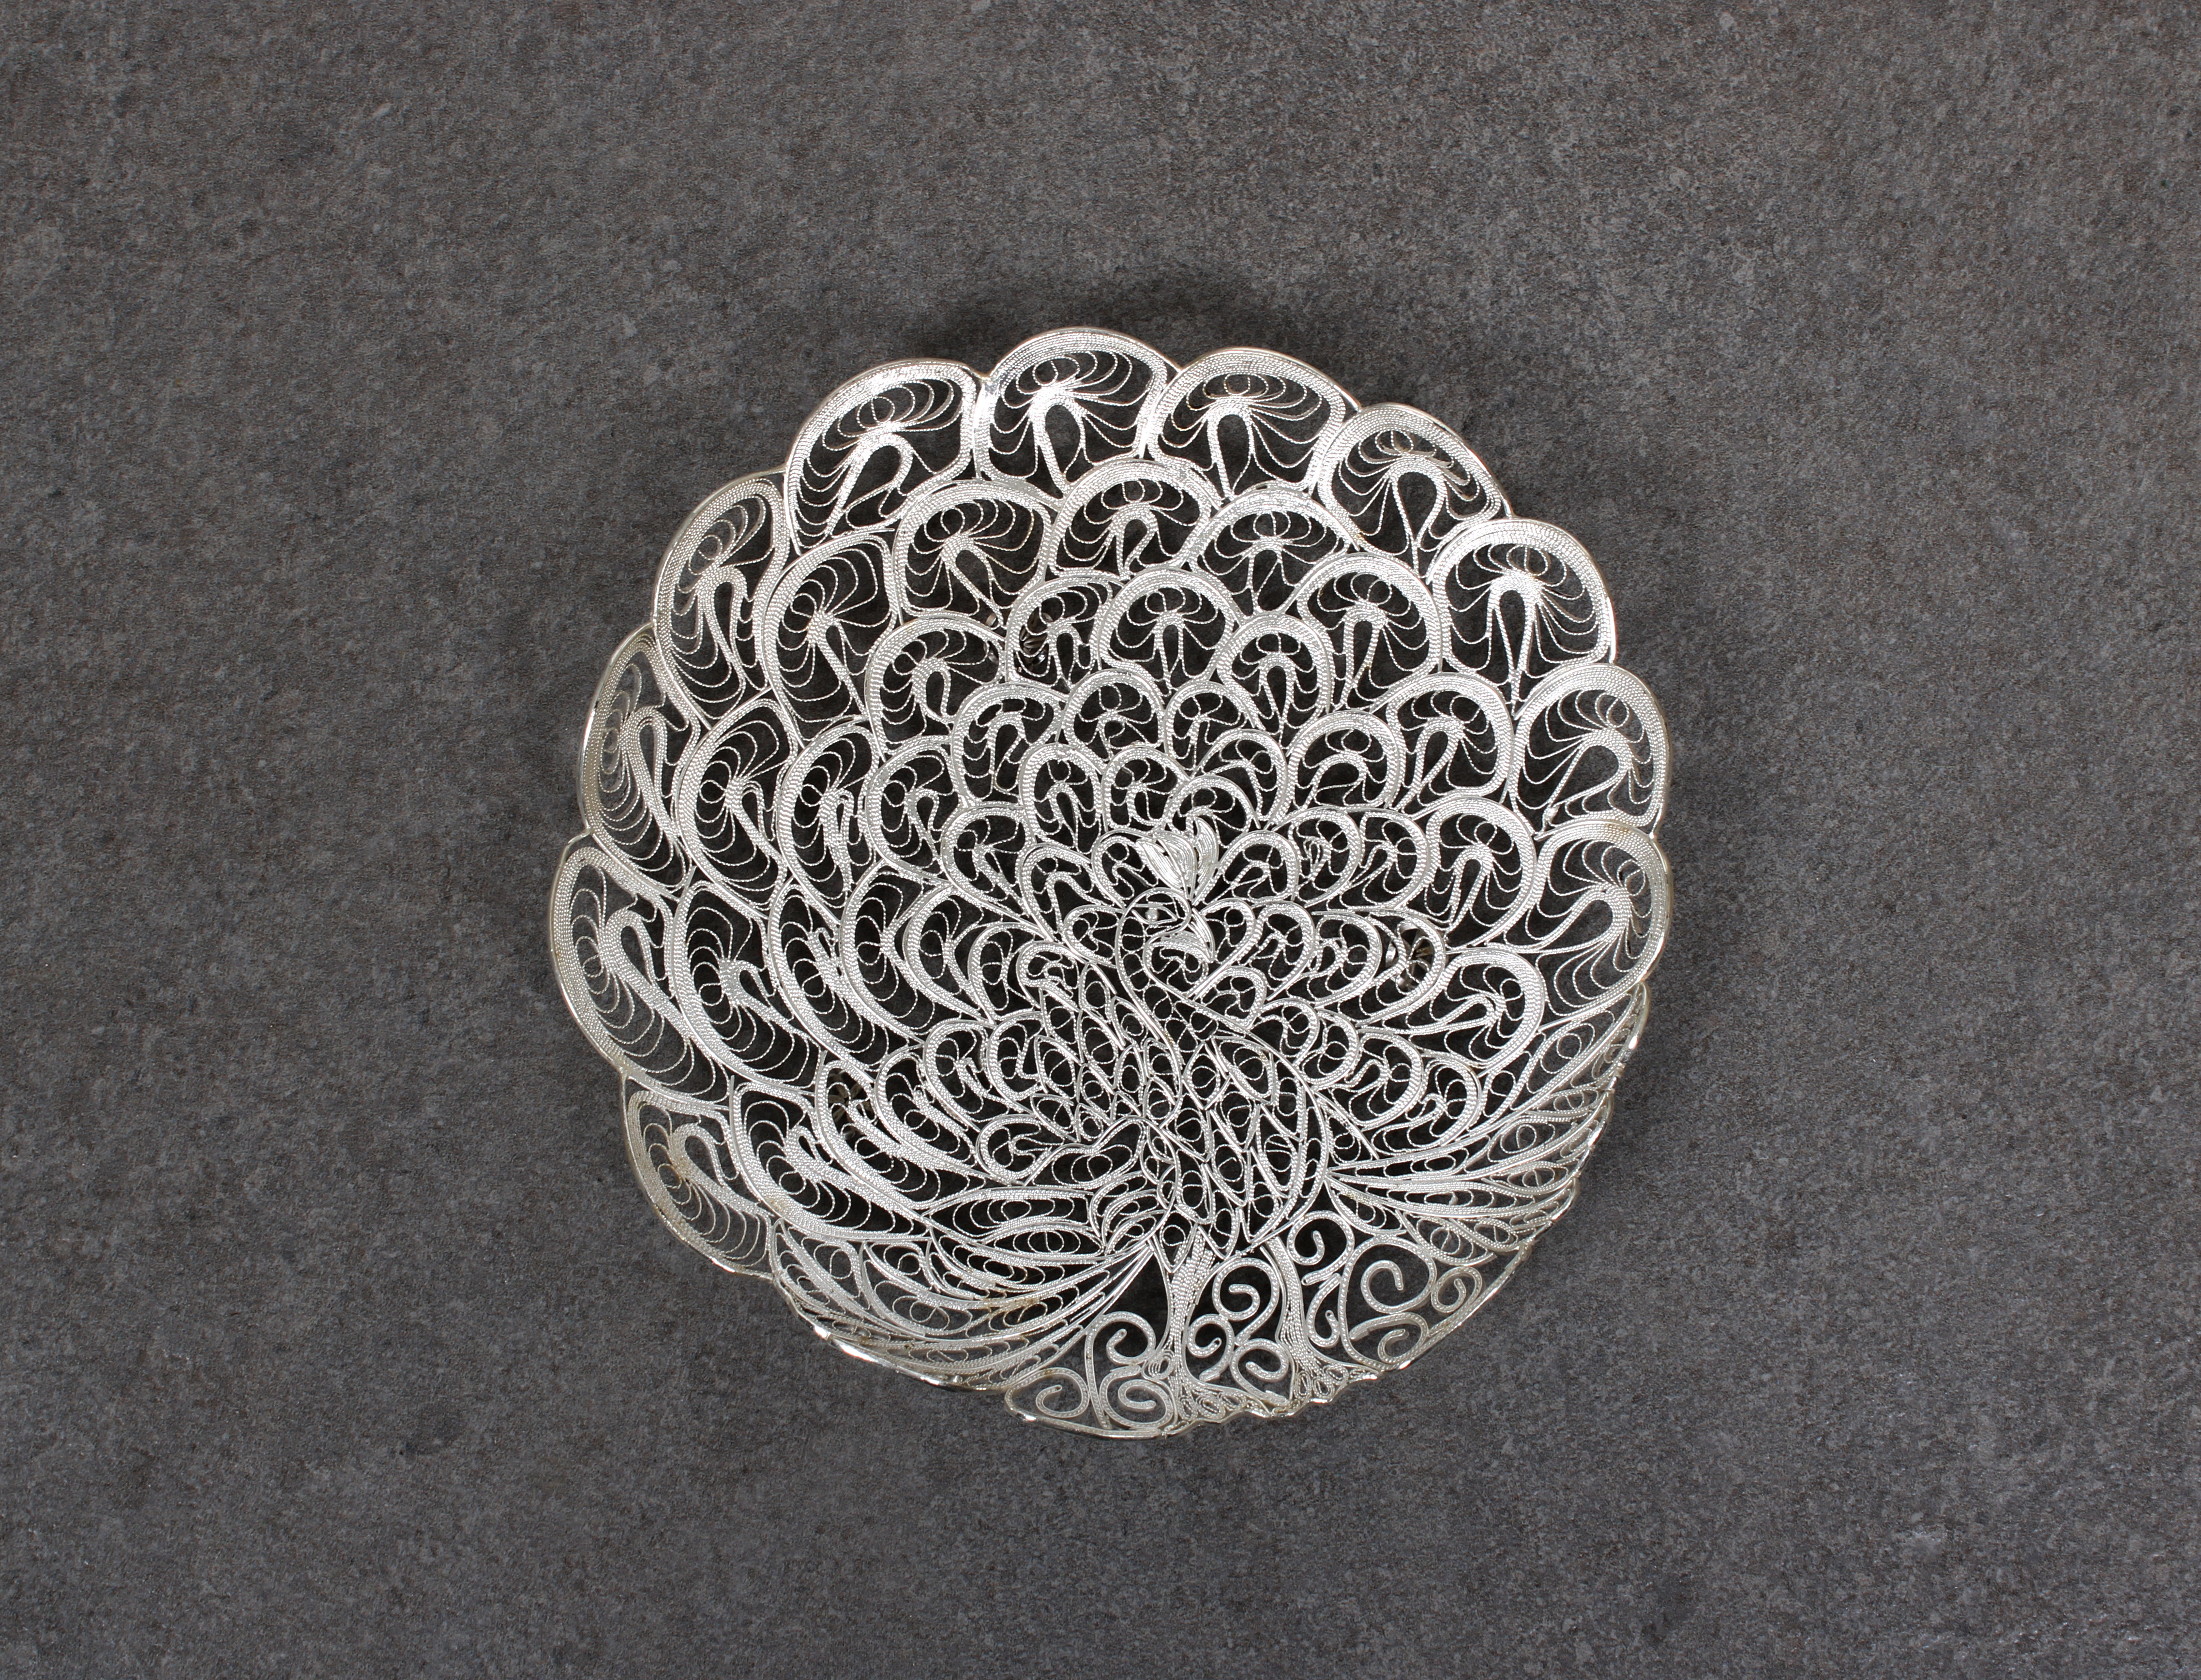 An ornate silver filigree peacock trinket tray / dish